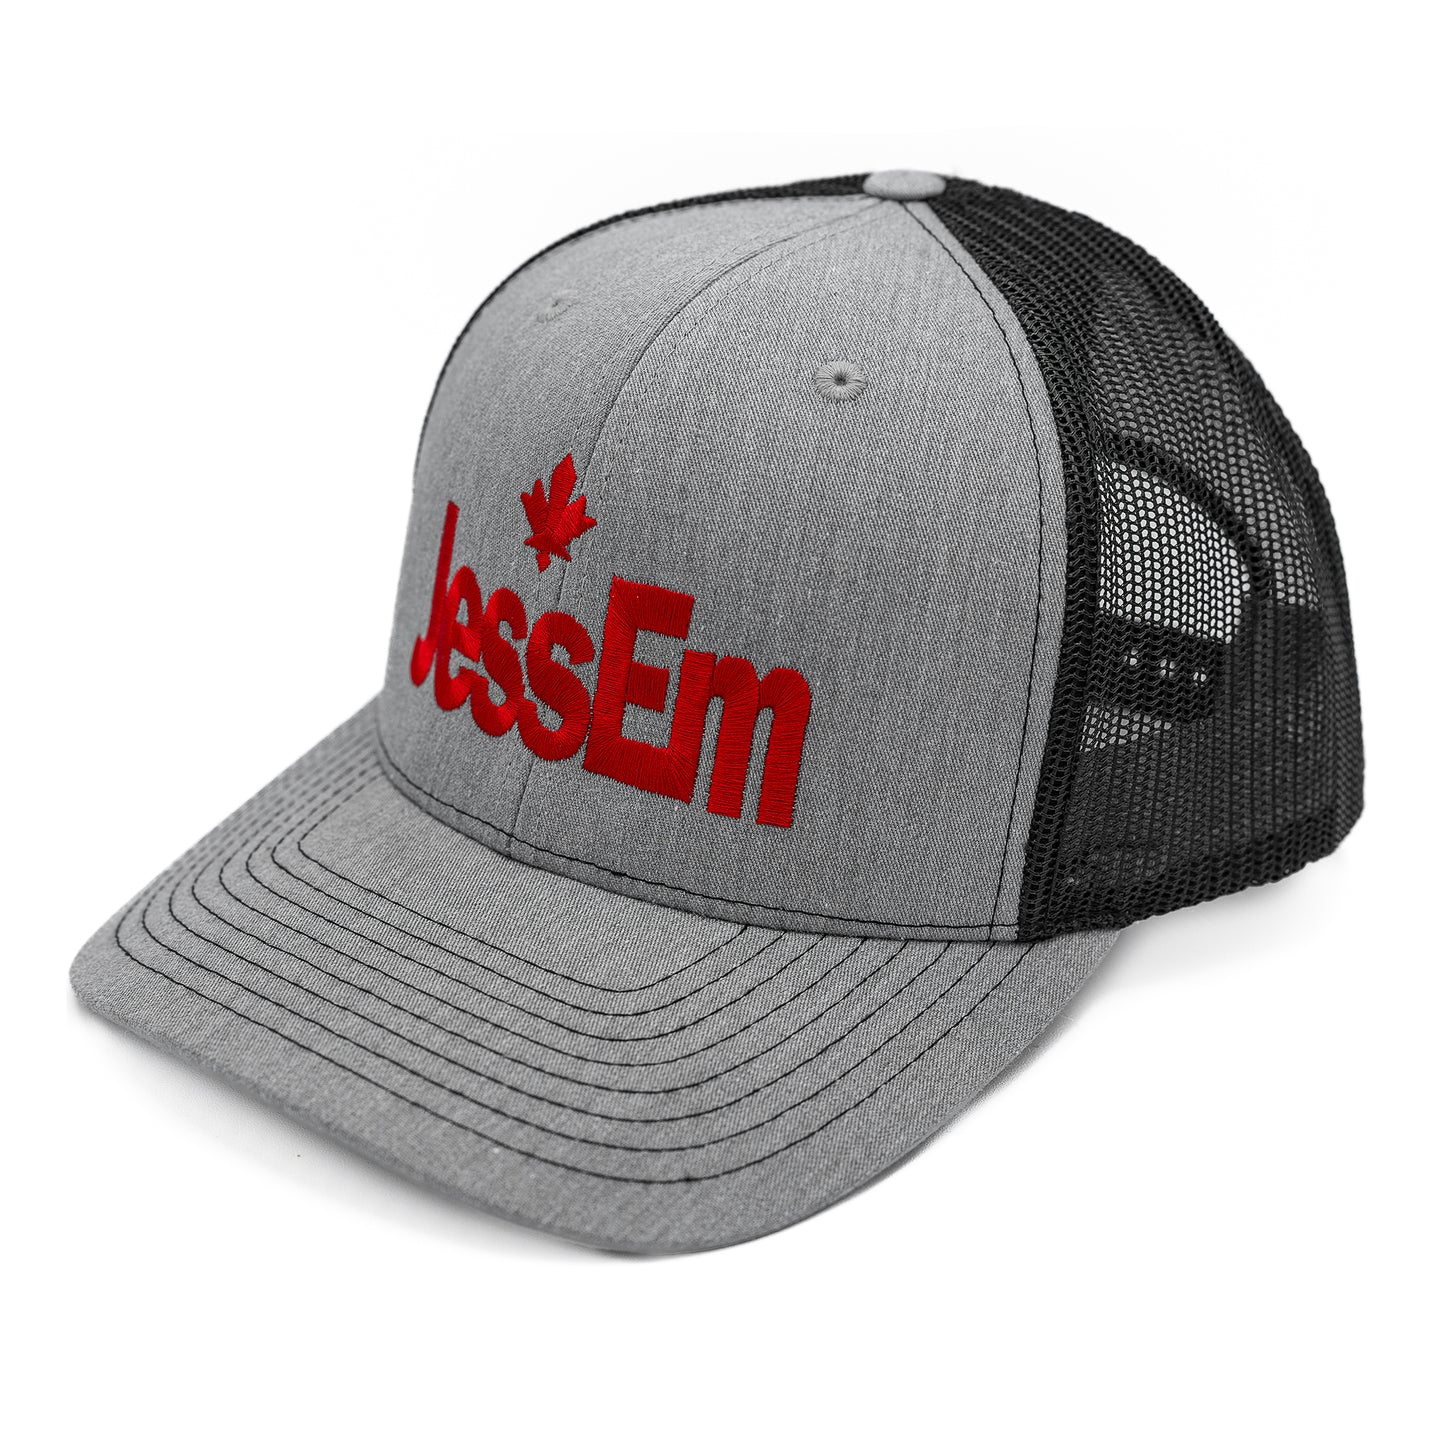 JessEm Grey Hat